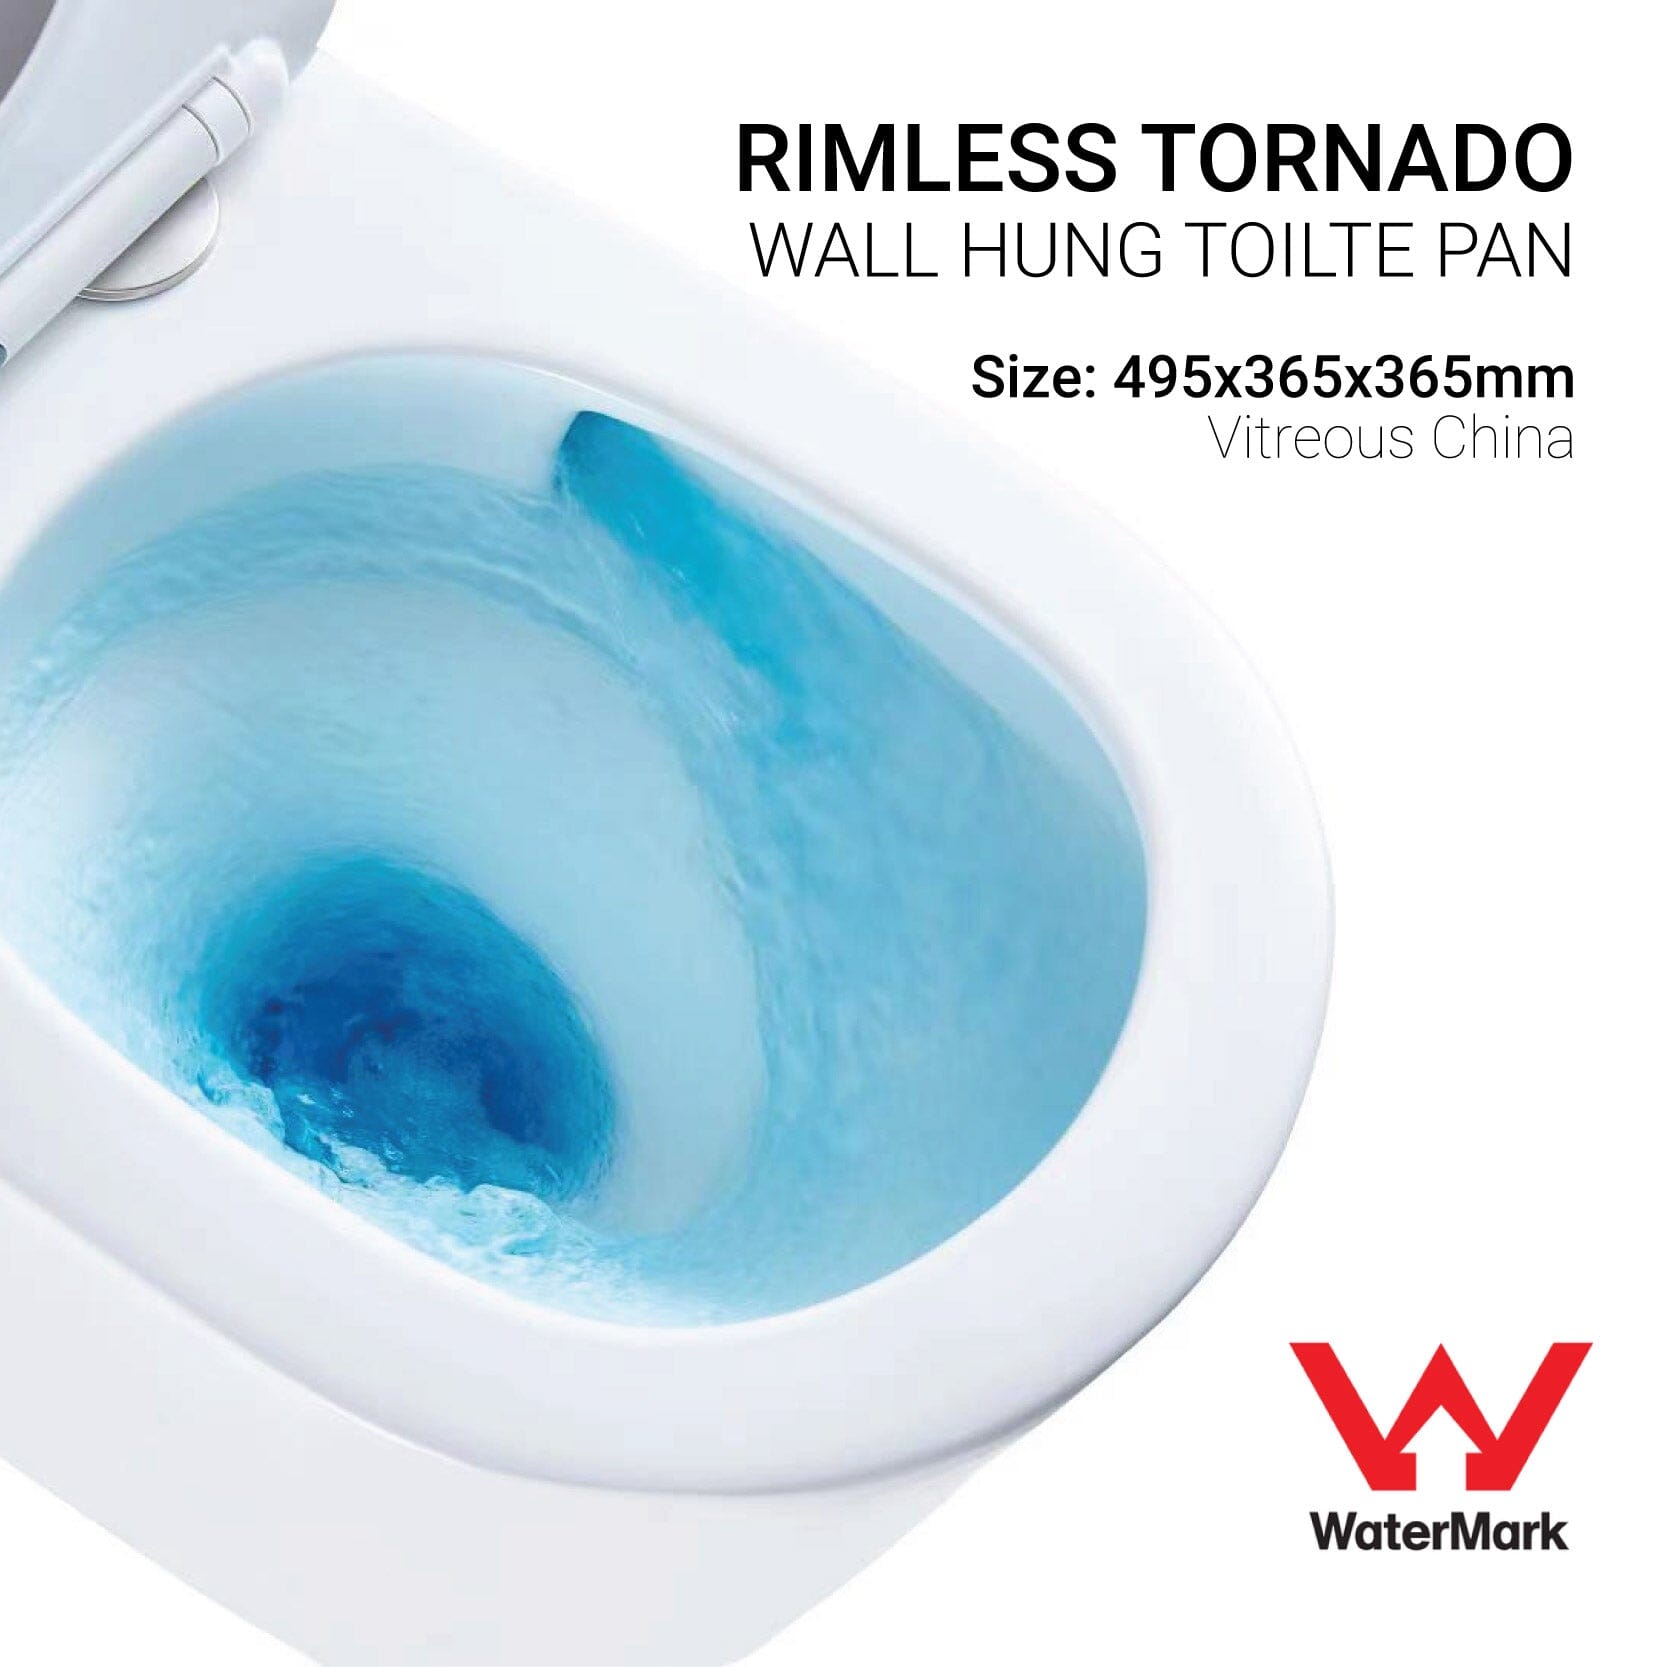 Max49 Rimless Tornado Wall Hung Pan Toilets Arova 